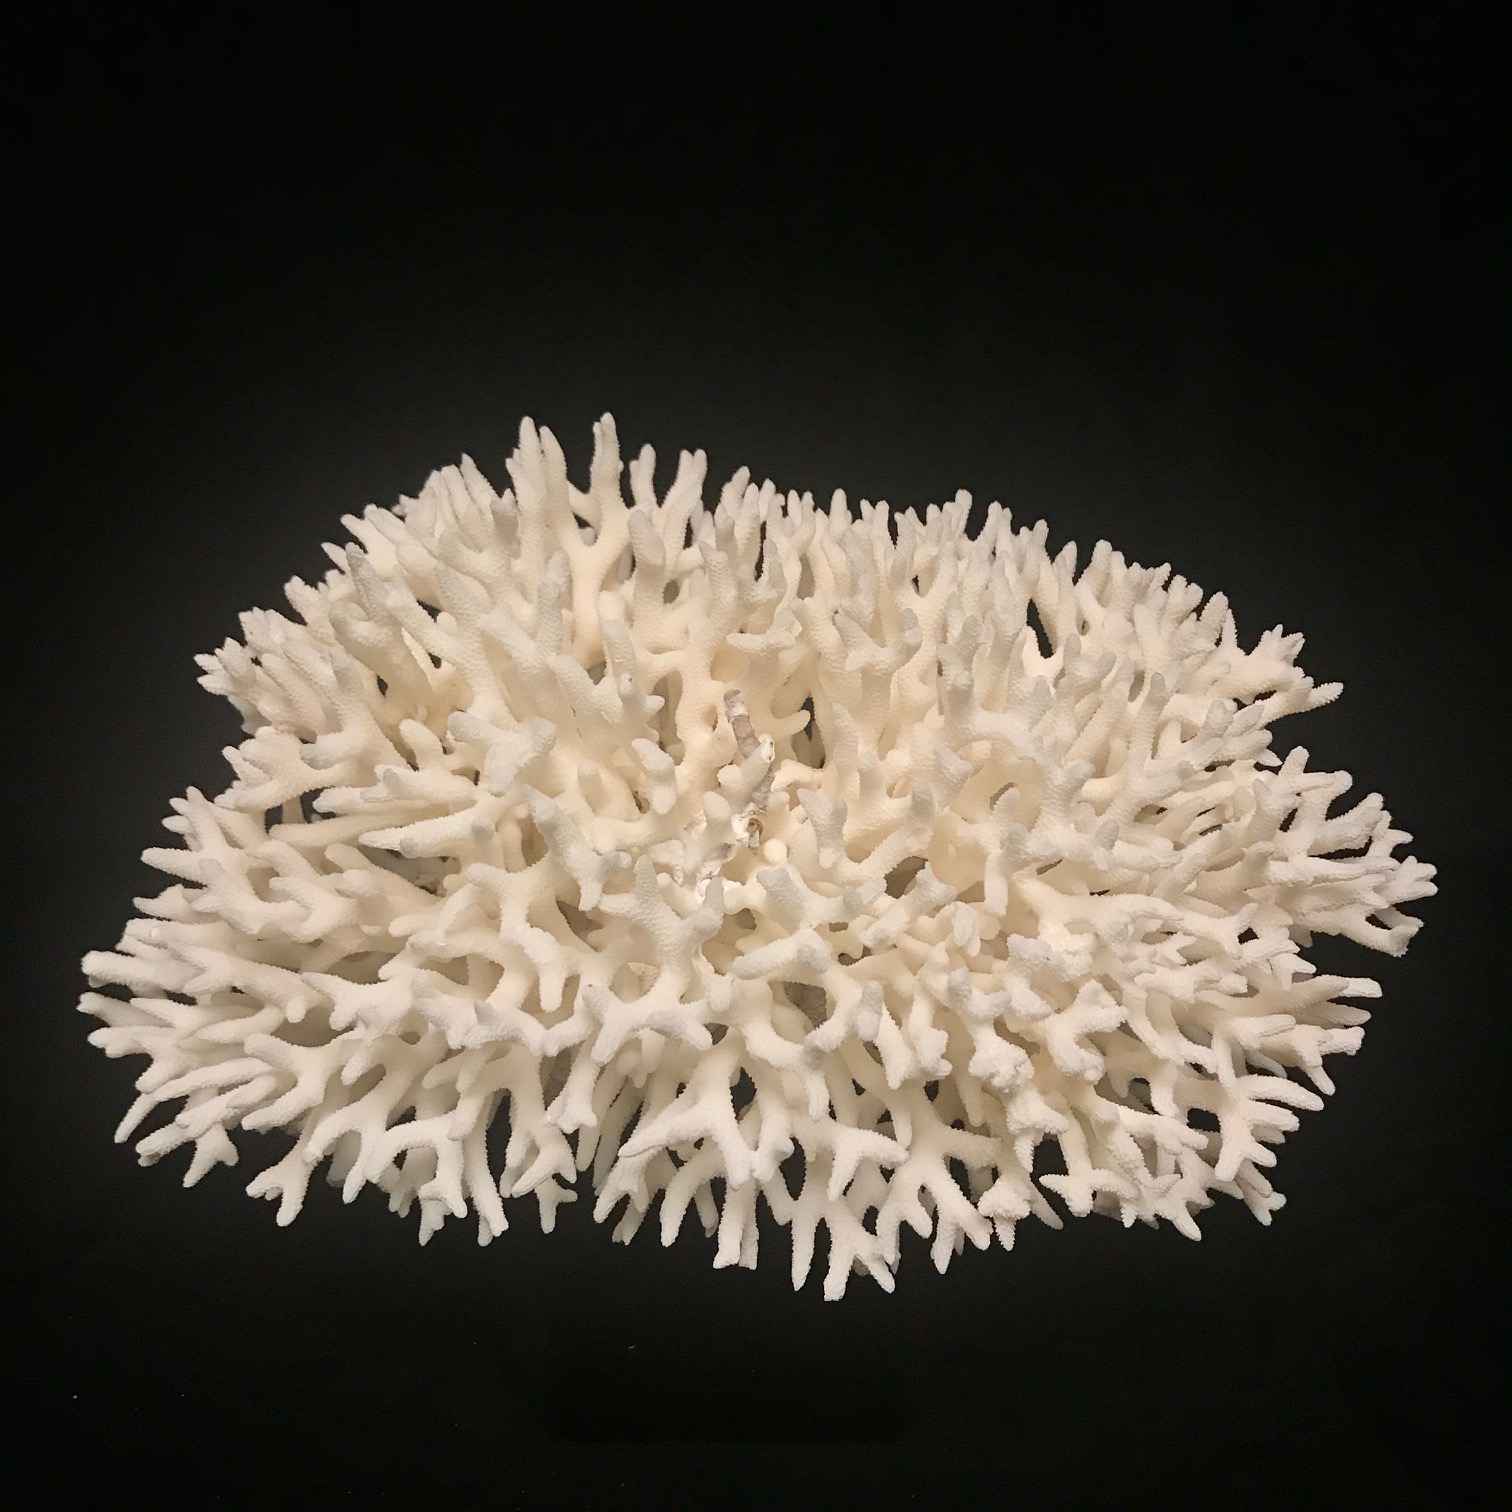 Exquisite Bird's Nest coral specimen, available at natur.